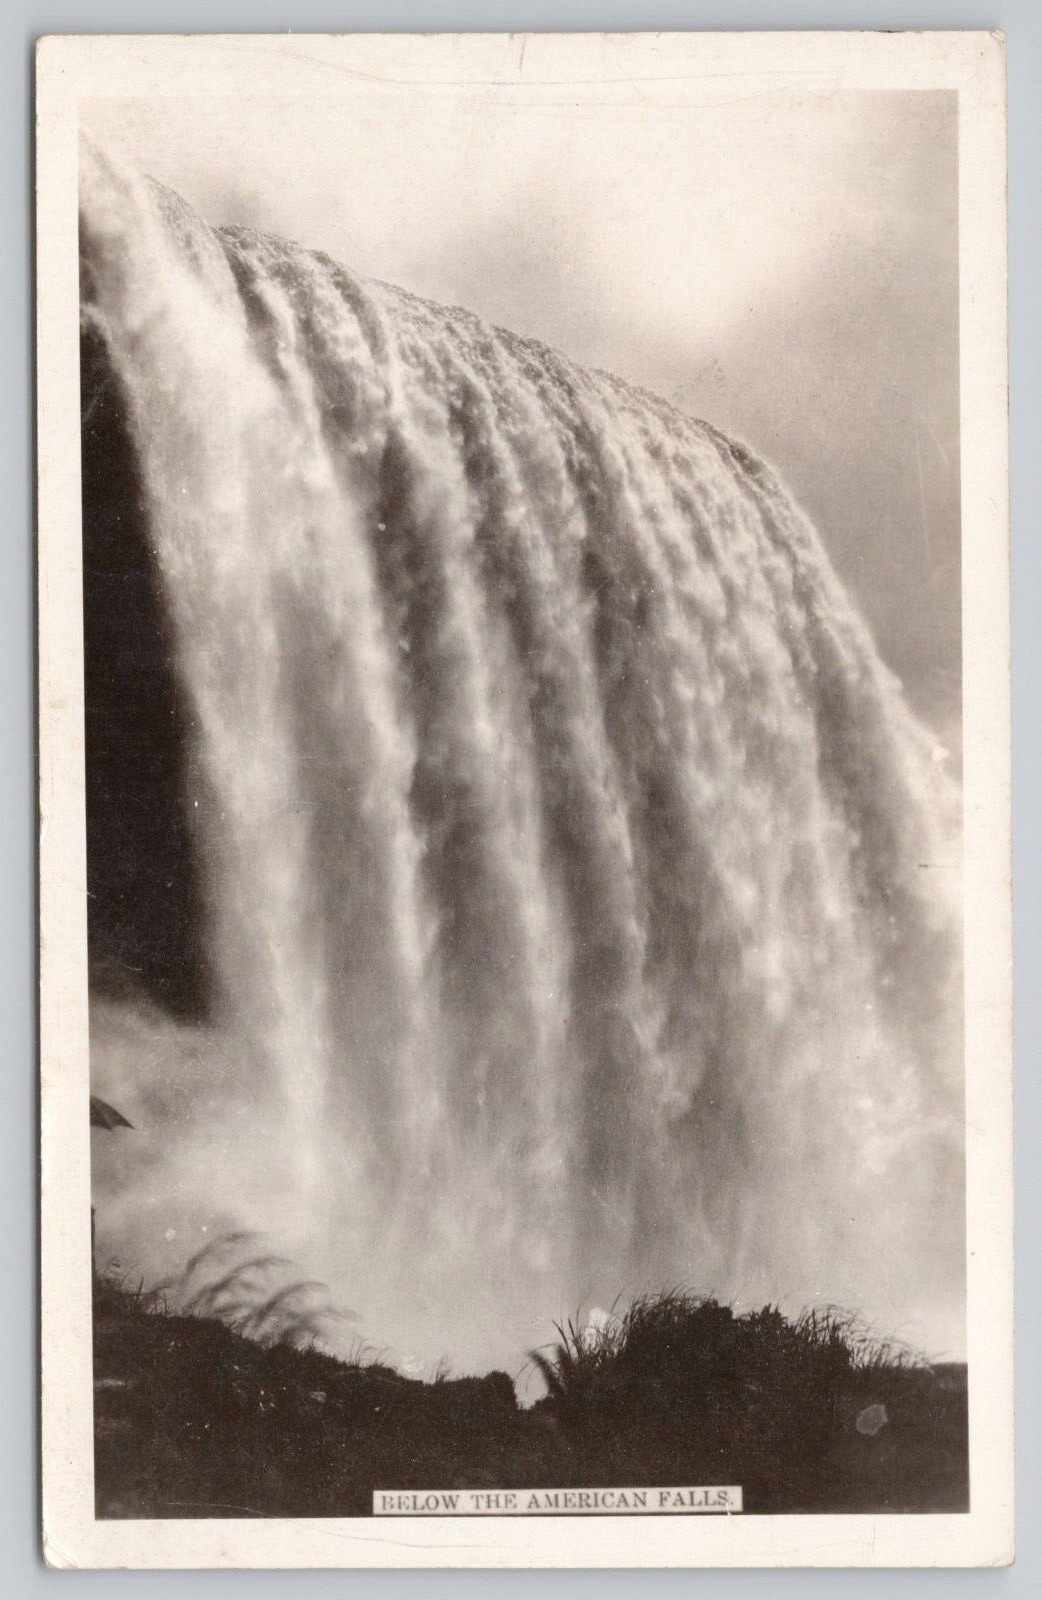 Postcard RPPC Below the American Falls, Niagara Falls, New York Vintage PM 1939